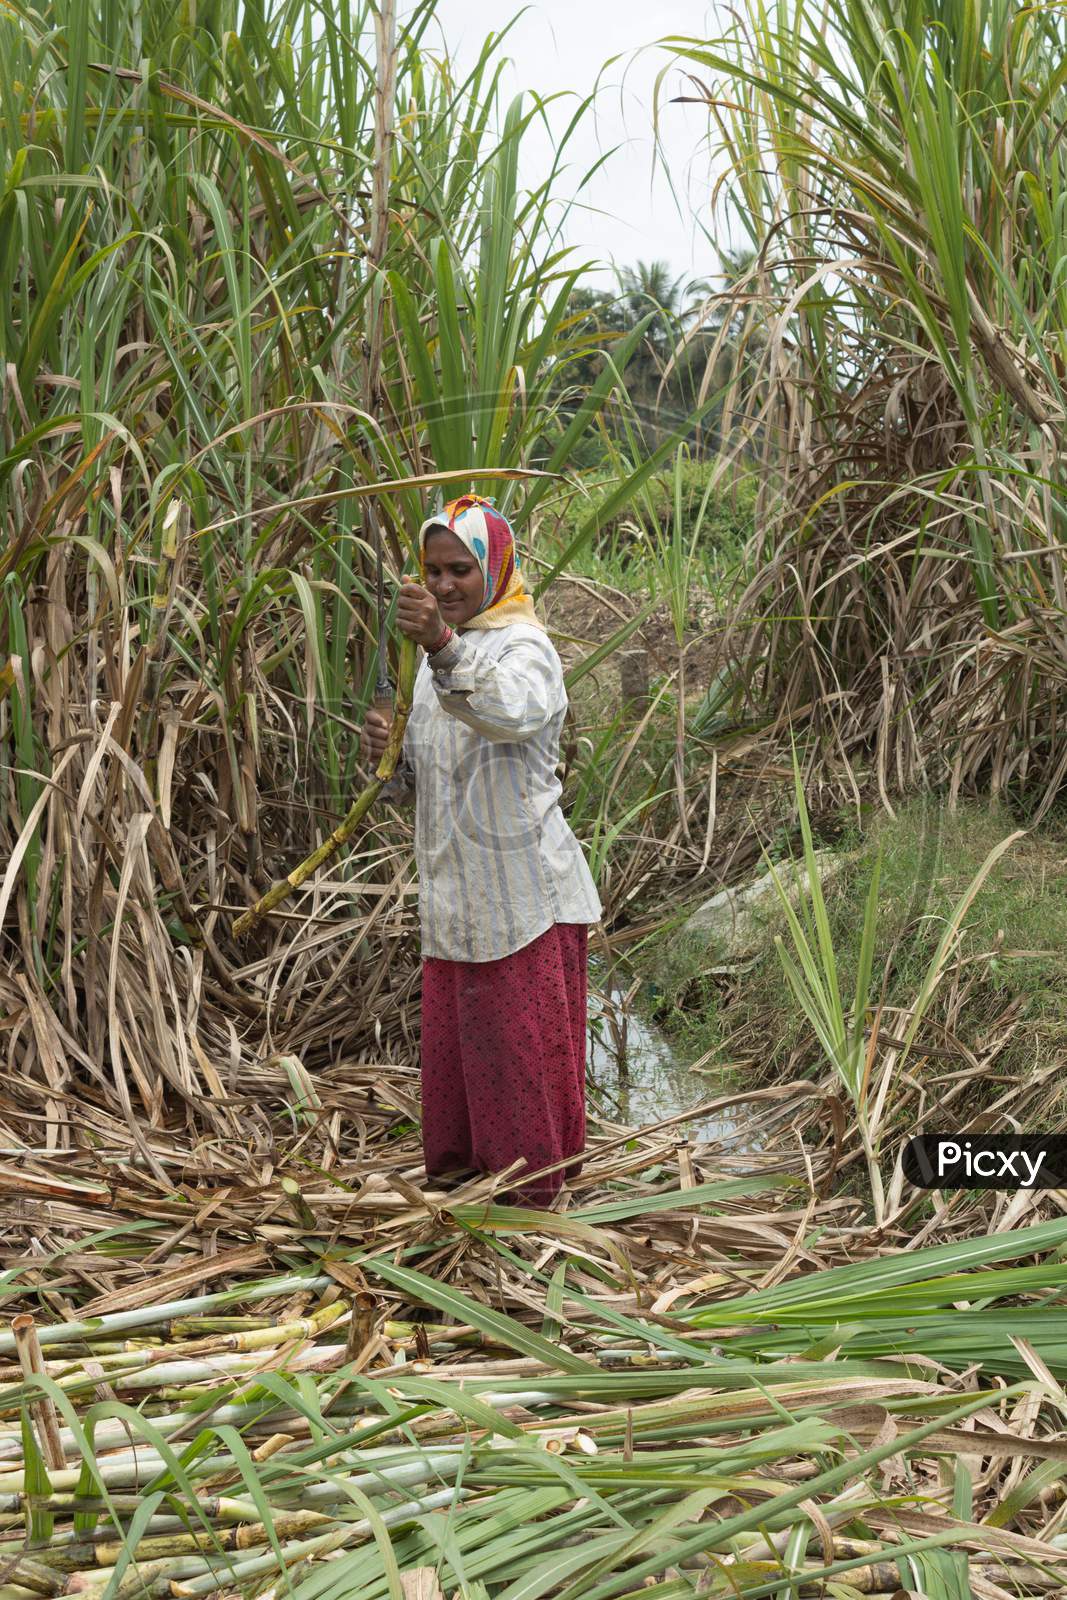 A Lady labor is at work in the Sugarcane fields for Harvesting near Mysuru/Karnataka.